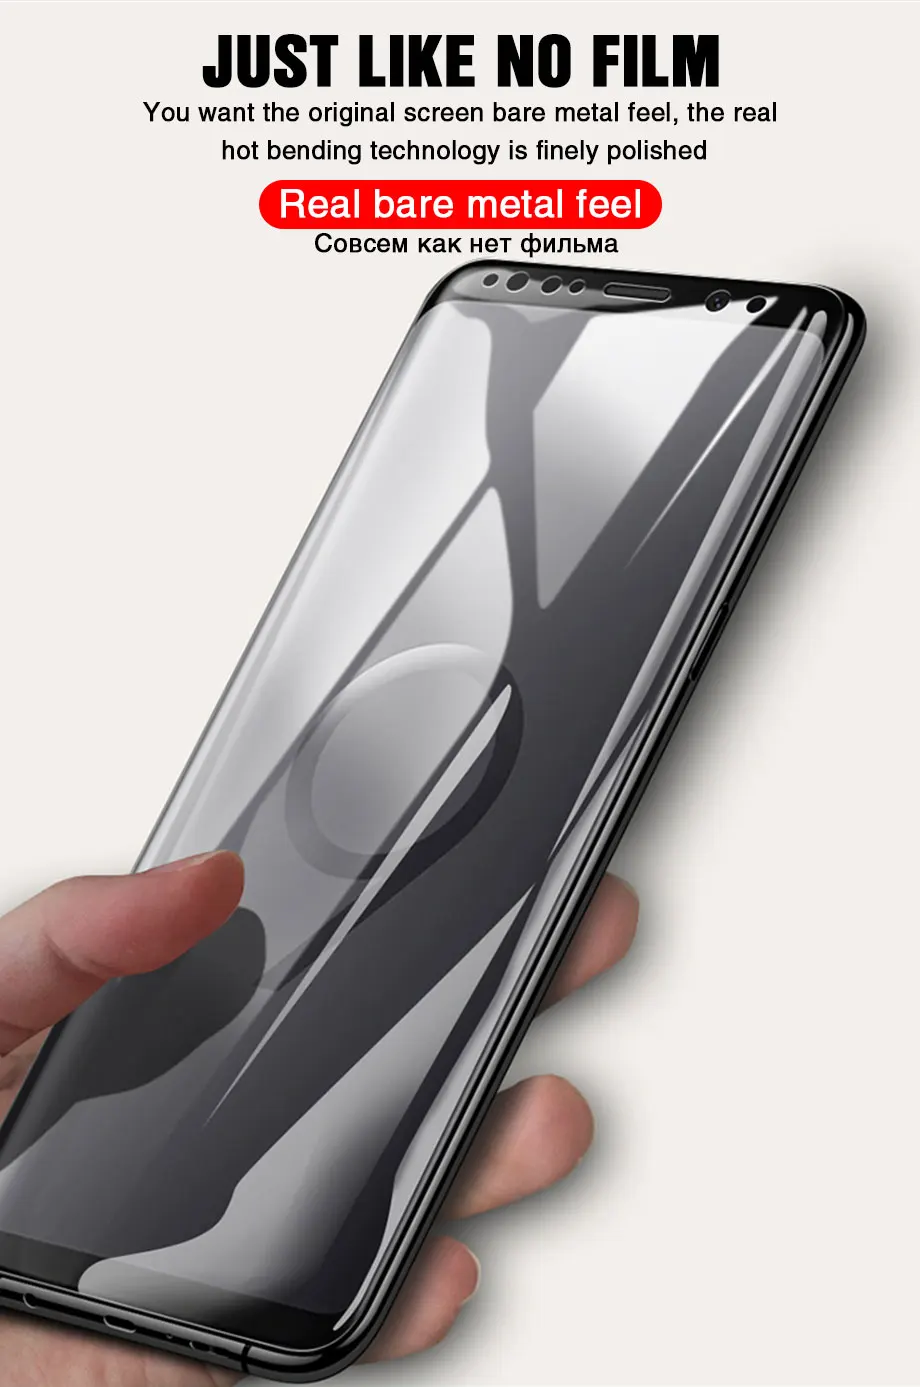 111D полностью изогнутая Защитная пленка для экрана на samsung Galaxy S9 S8 S10 Plus Note 8 9 защитная пленка на S6 S7 Edge S10e не стекло